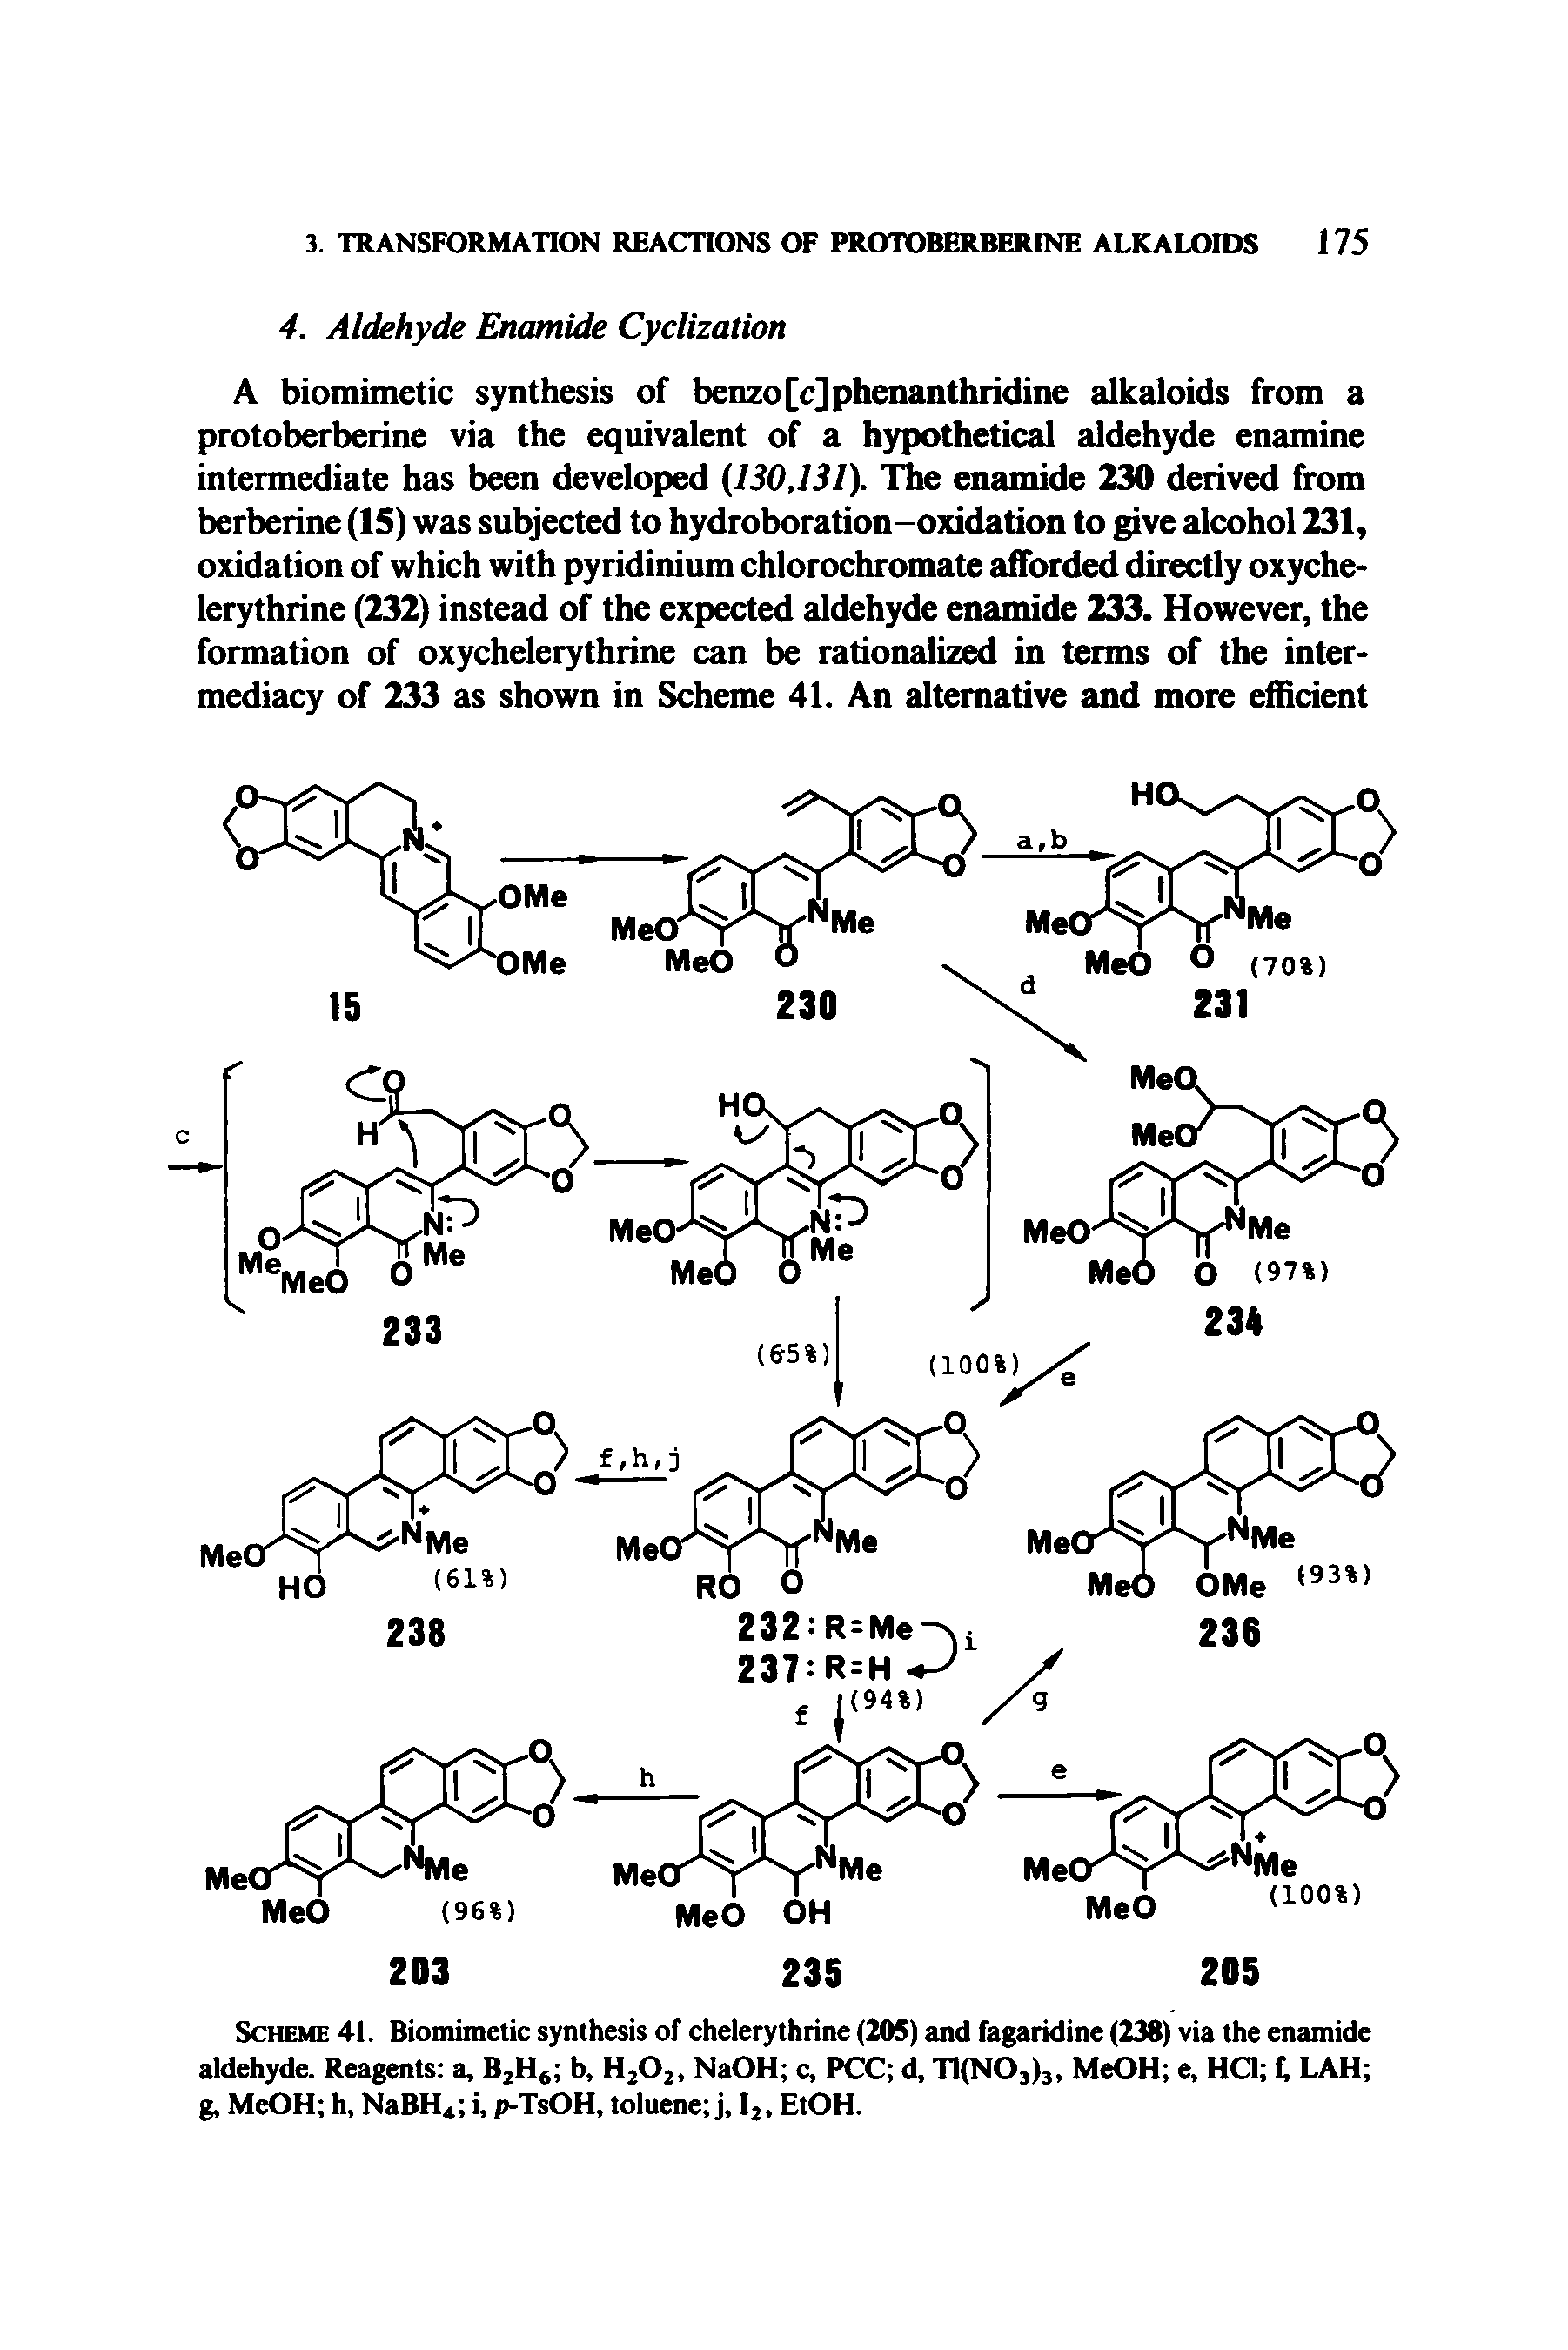 Scheme 41. Biomimetic synthesis of chelerythrine (205) and fagaridine (238) via the enamide aldehyde. Reagents a, B2H6 b, H202, NaOH c, PCC d, T1(N03)3, MeOH e, HC1 f, LAH g, MeOH h, NaBH4 i, p-TsOH, toluene j, I2, EtOH.